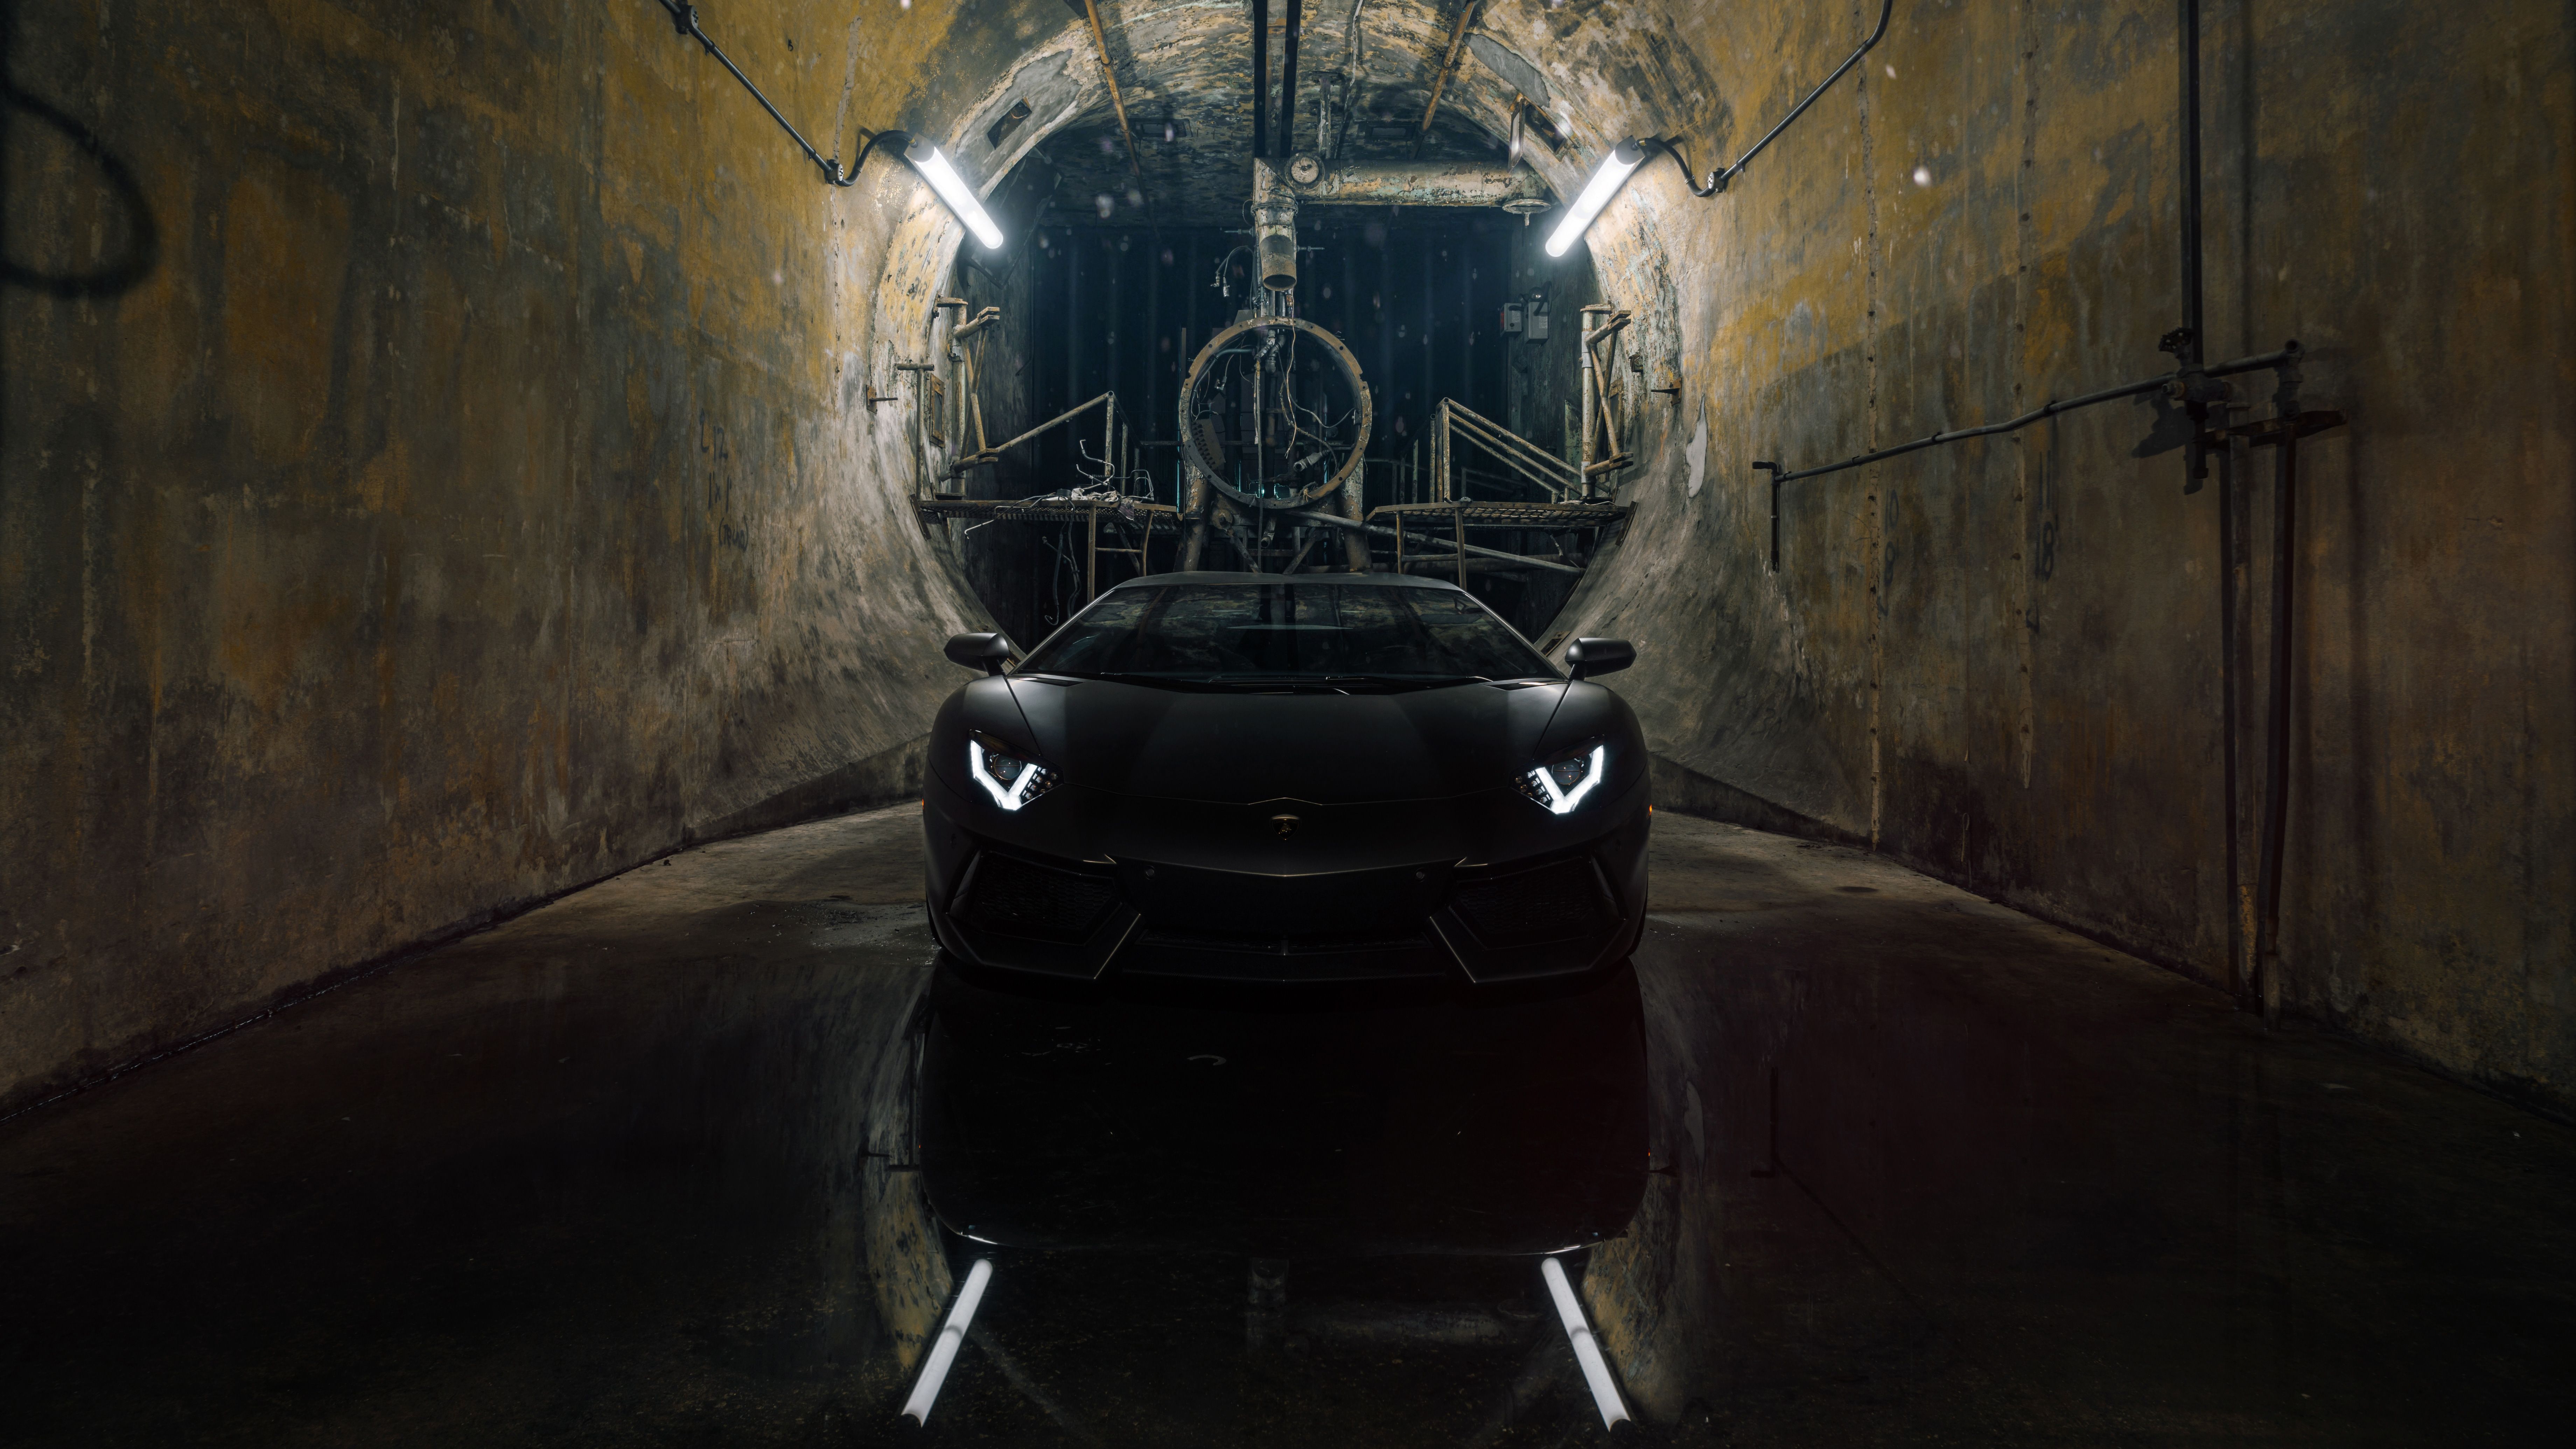 Black Lamborghini Aventador, HD Cars, 4k Wallpaper, Image, Background, Photo and Picture